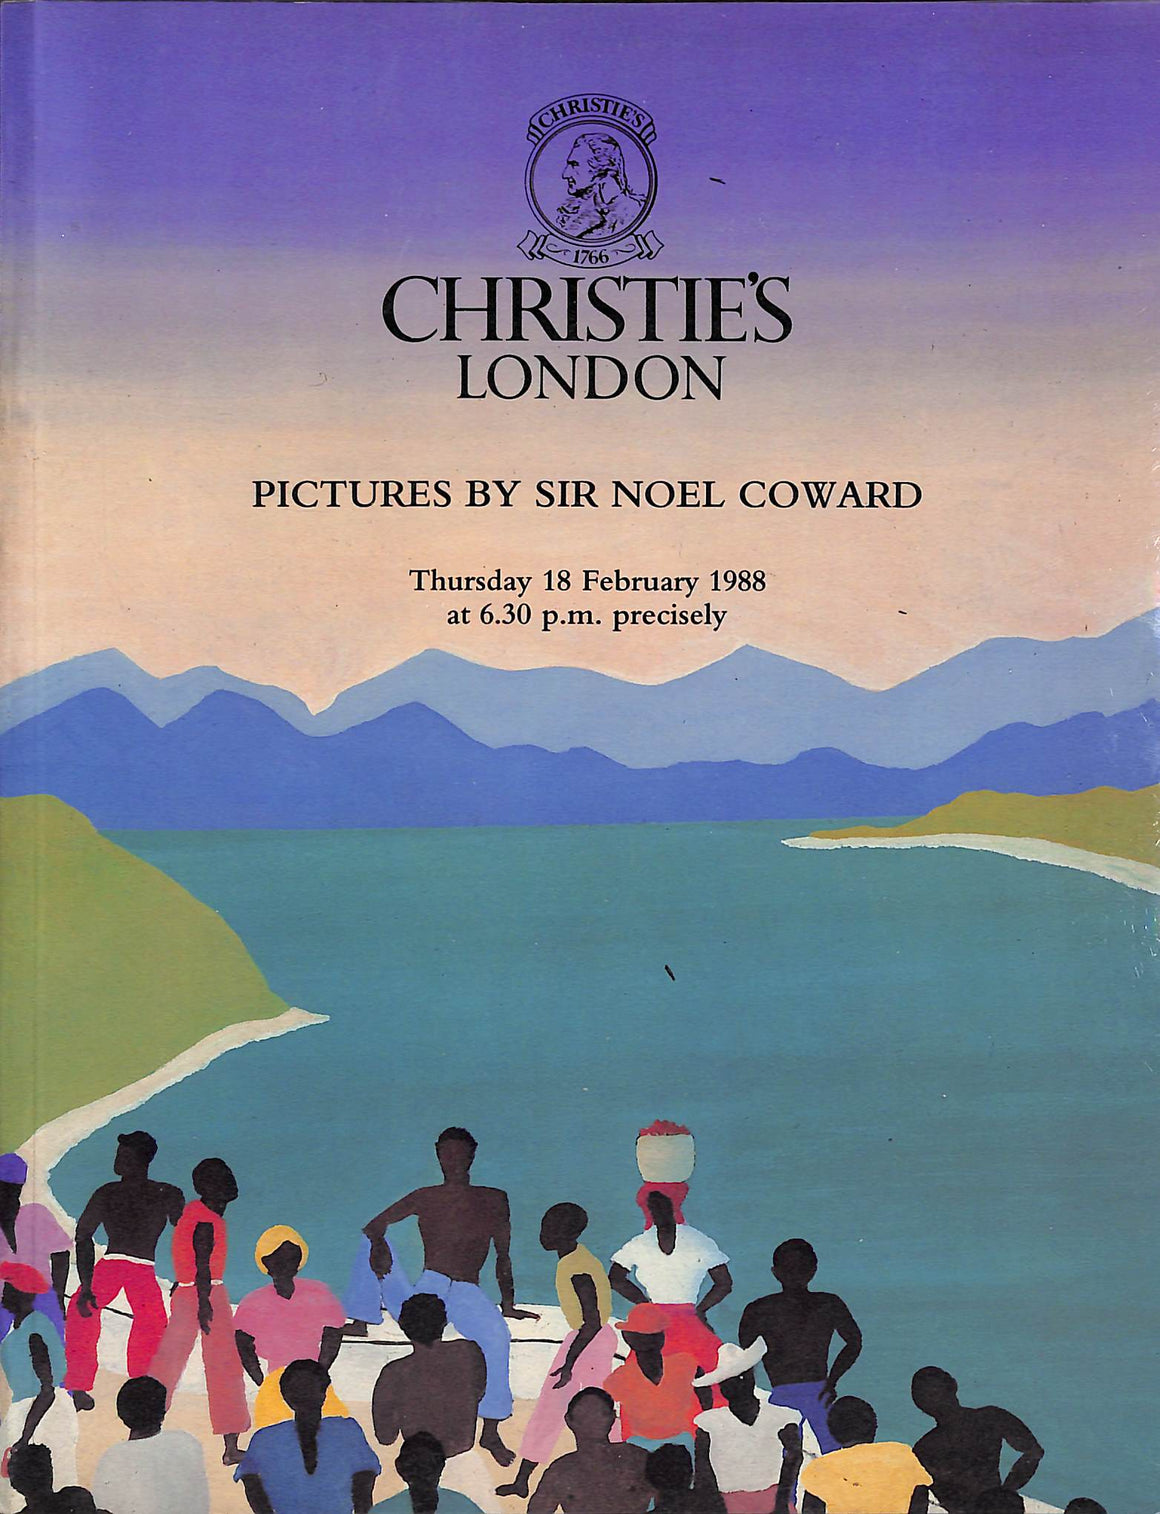 Pictures By Sir Noel Coward 1988 Christie's London